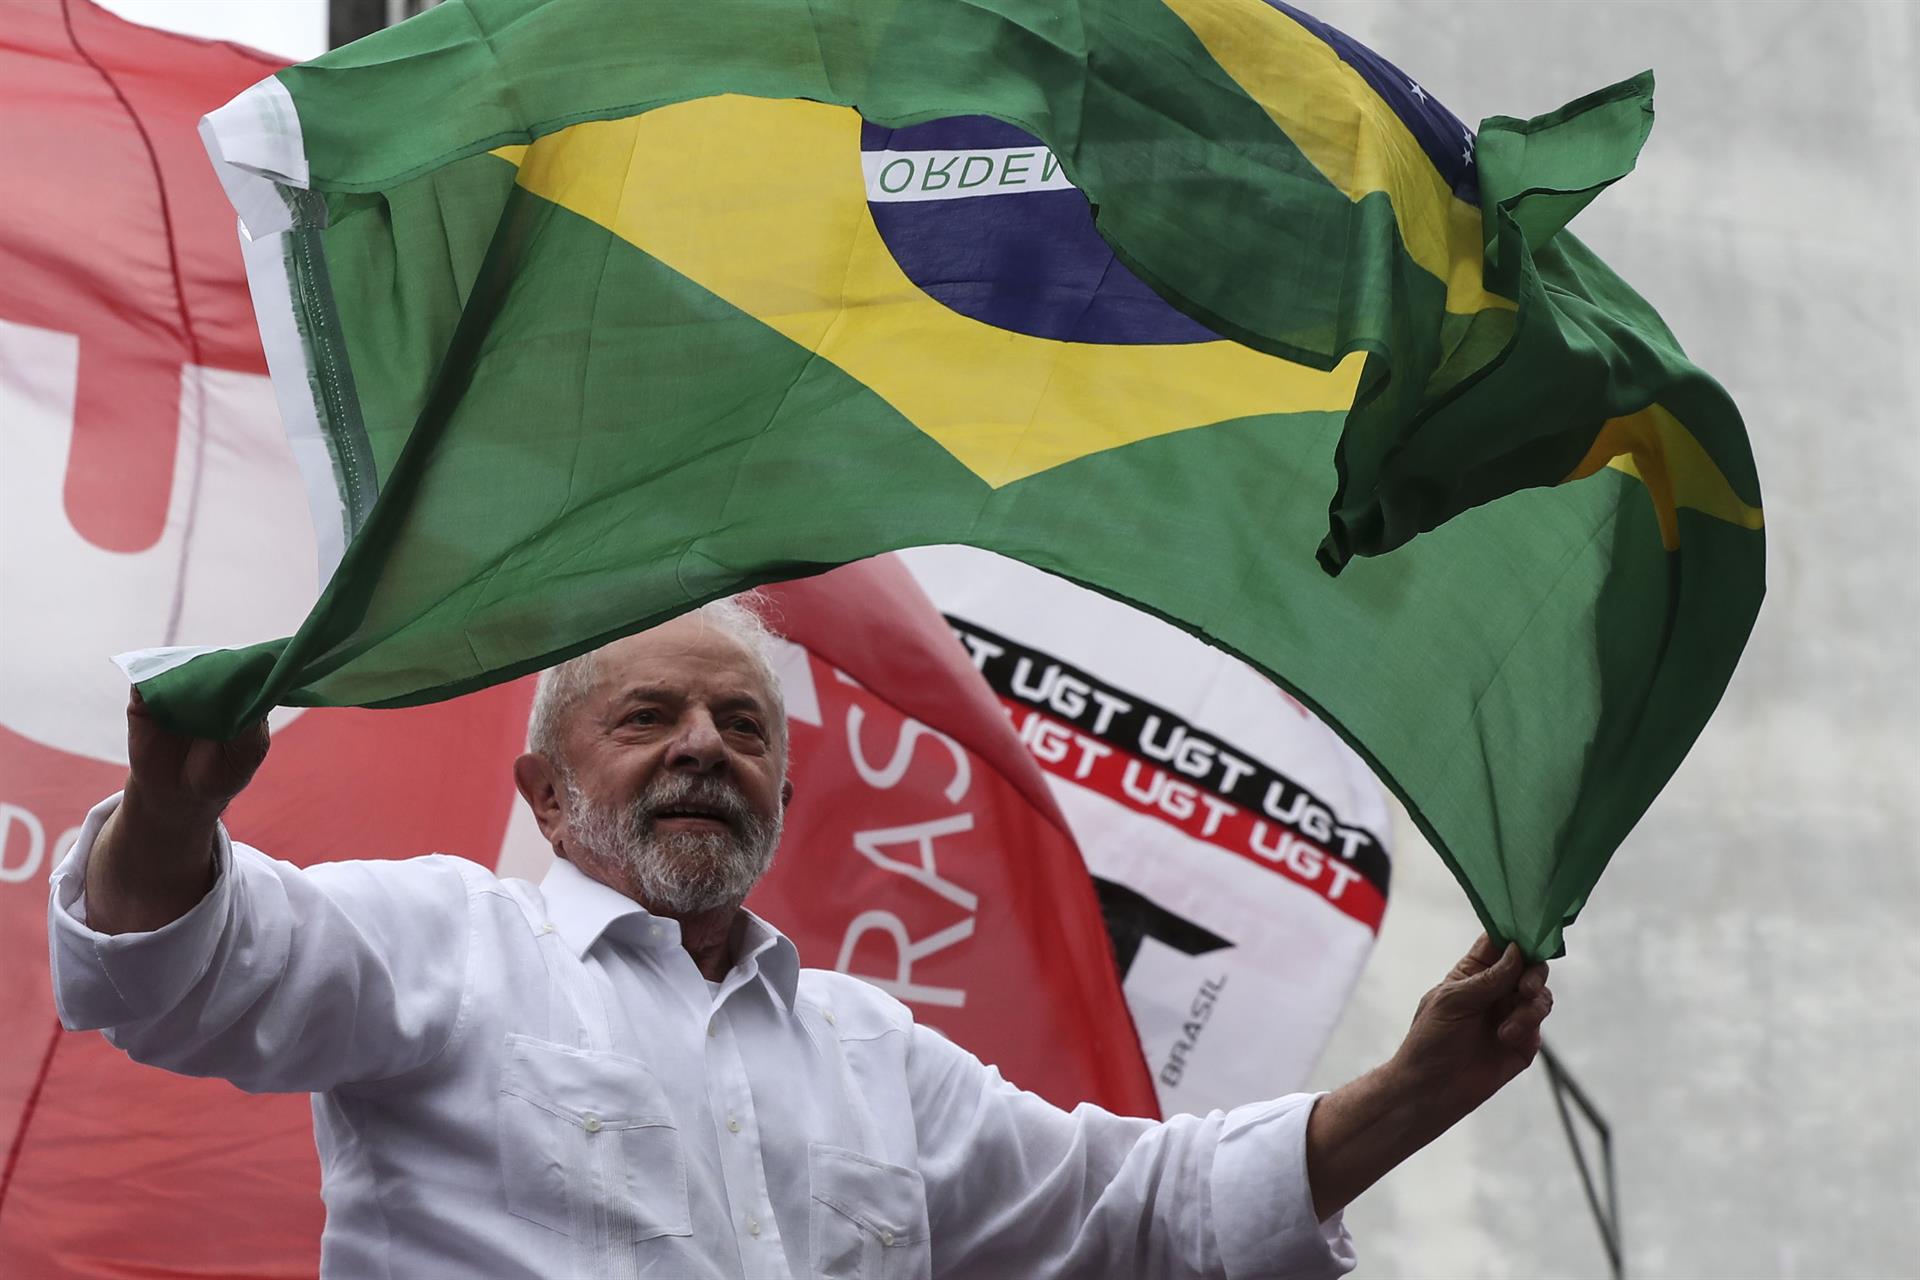 El actual candidato a la presidencia, Luiz Inácio Lula da Silva en Brasil. EFE/ Sebastião Moreira